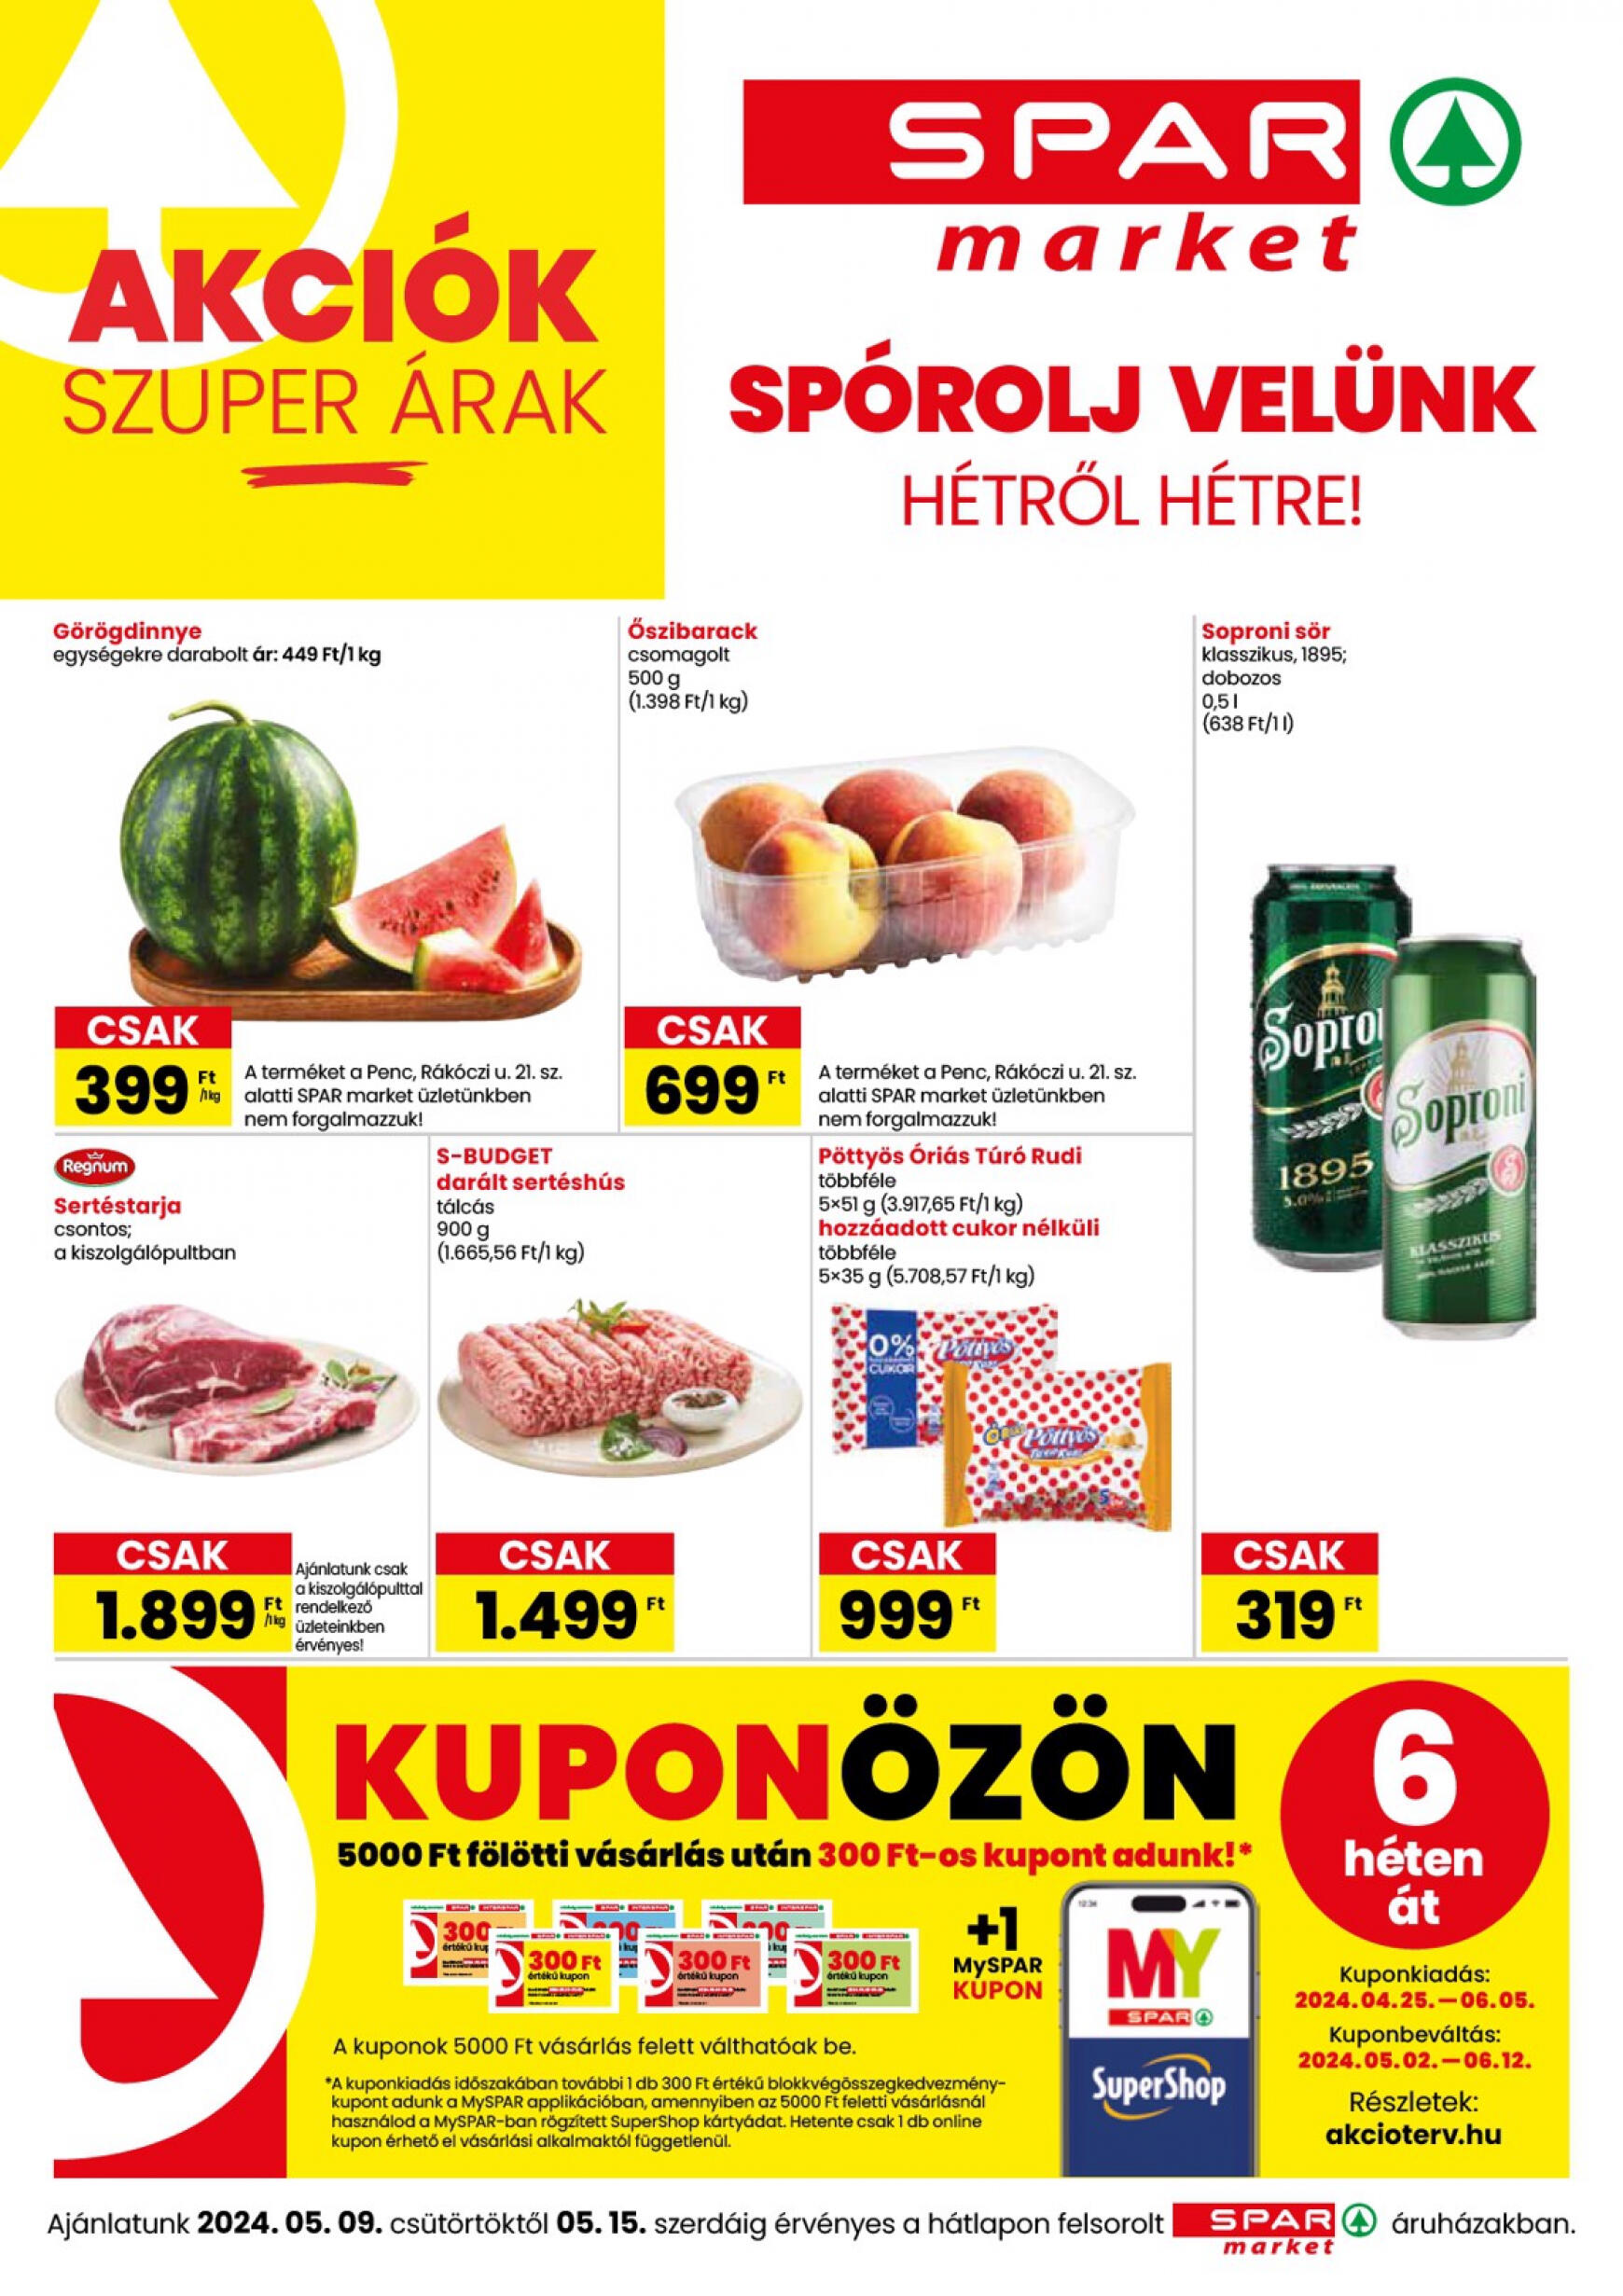 spar - Aktuális újság SPAR - market 05.09. - 05.15. - page: 1